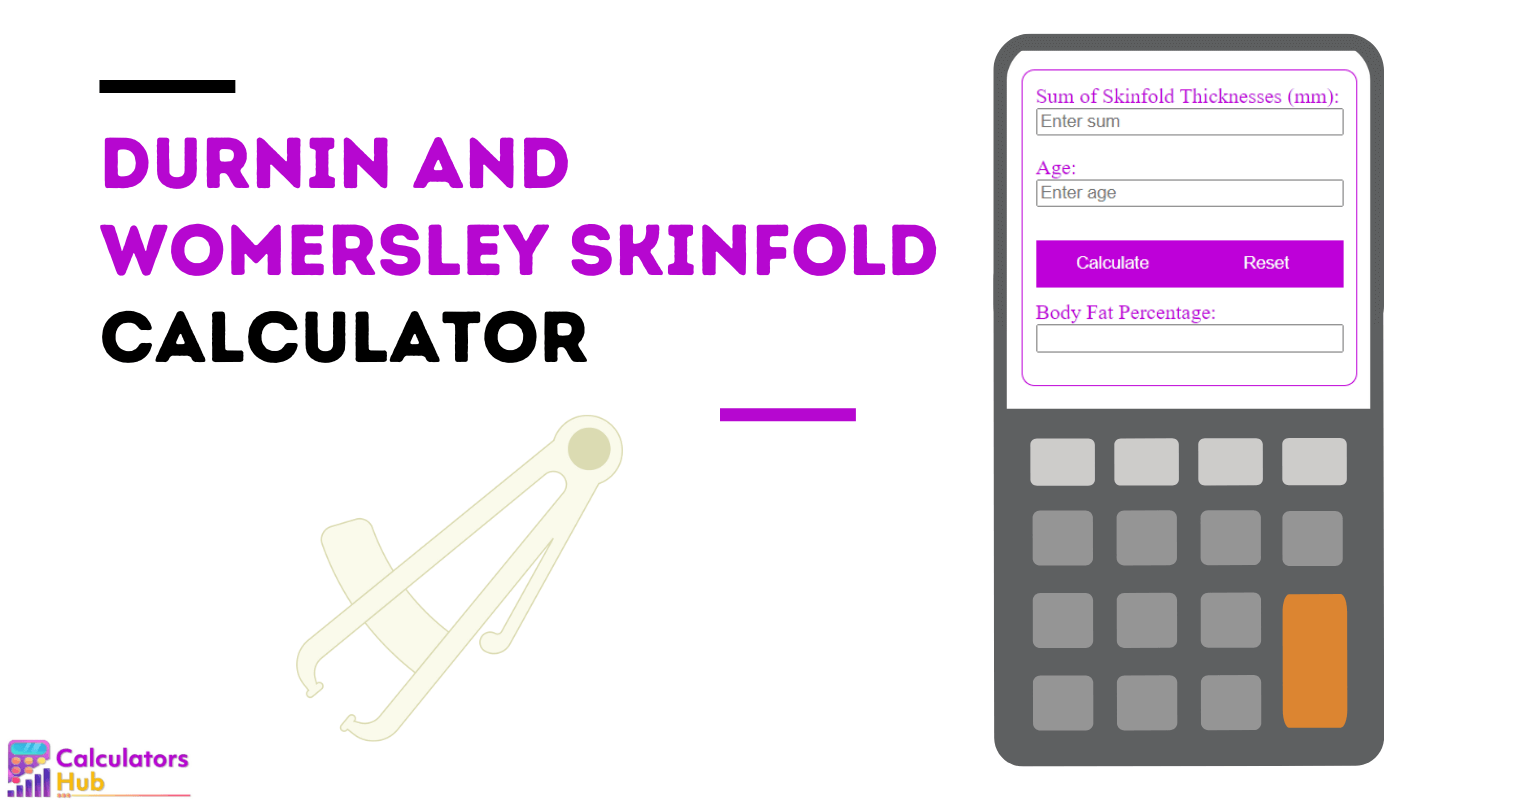 Durnin and Womersley Skinfold Calculator